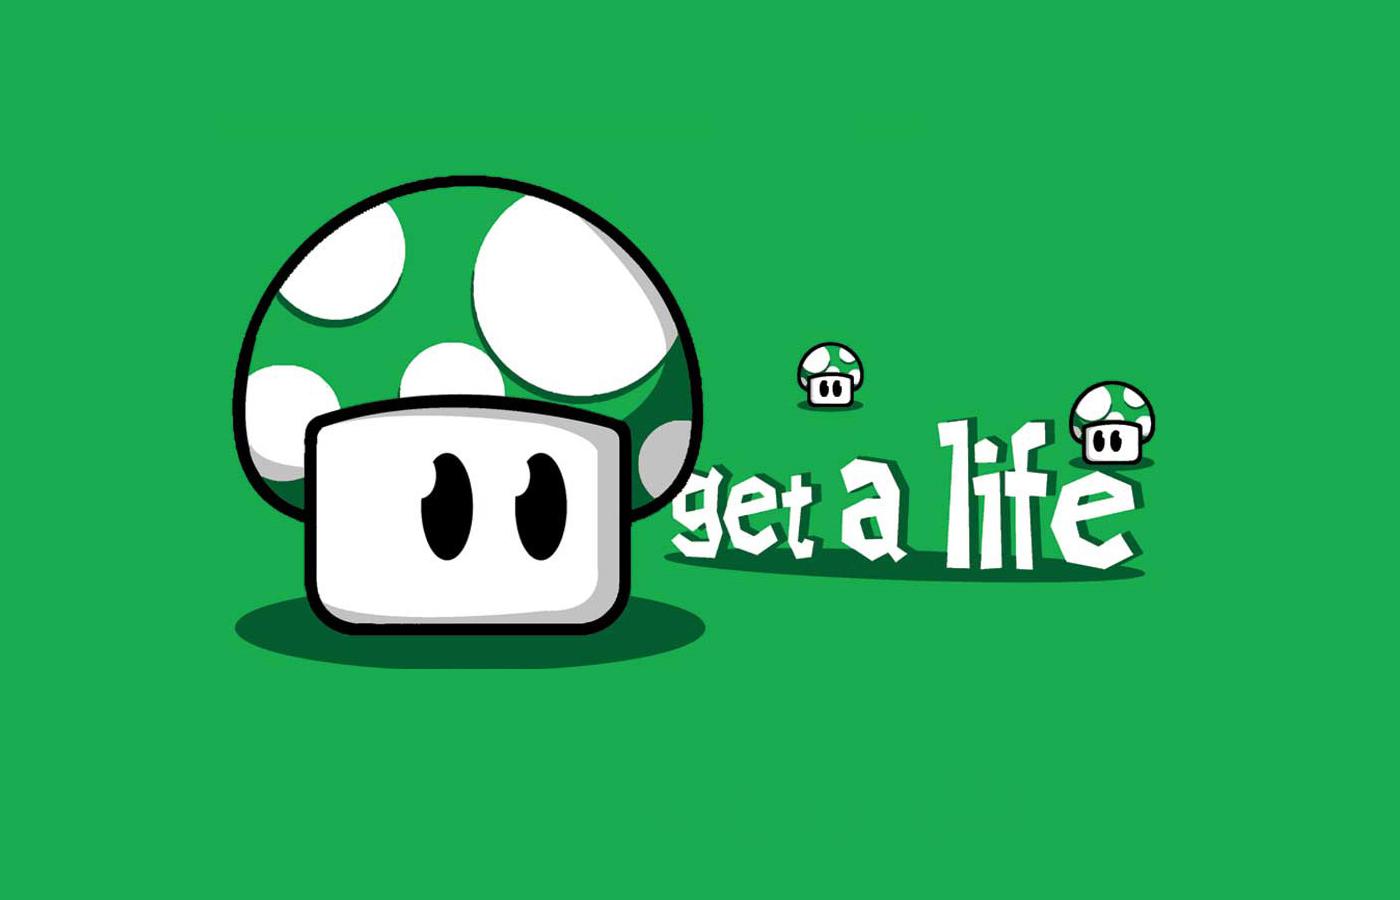 Get A Life 1up Green Mushroom HD Wallpaper Epic Desktop Background